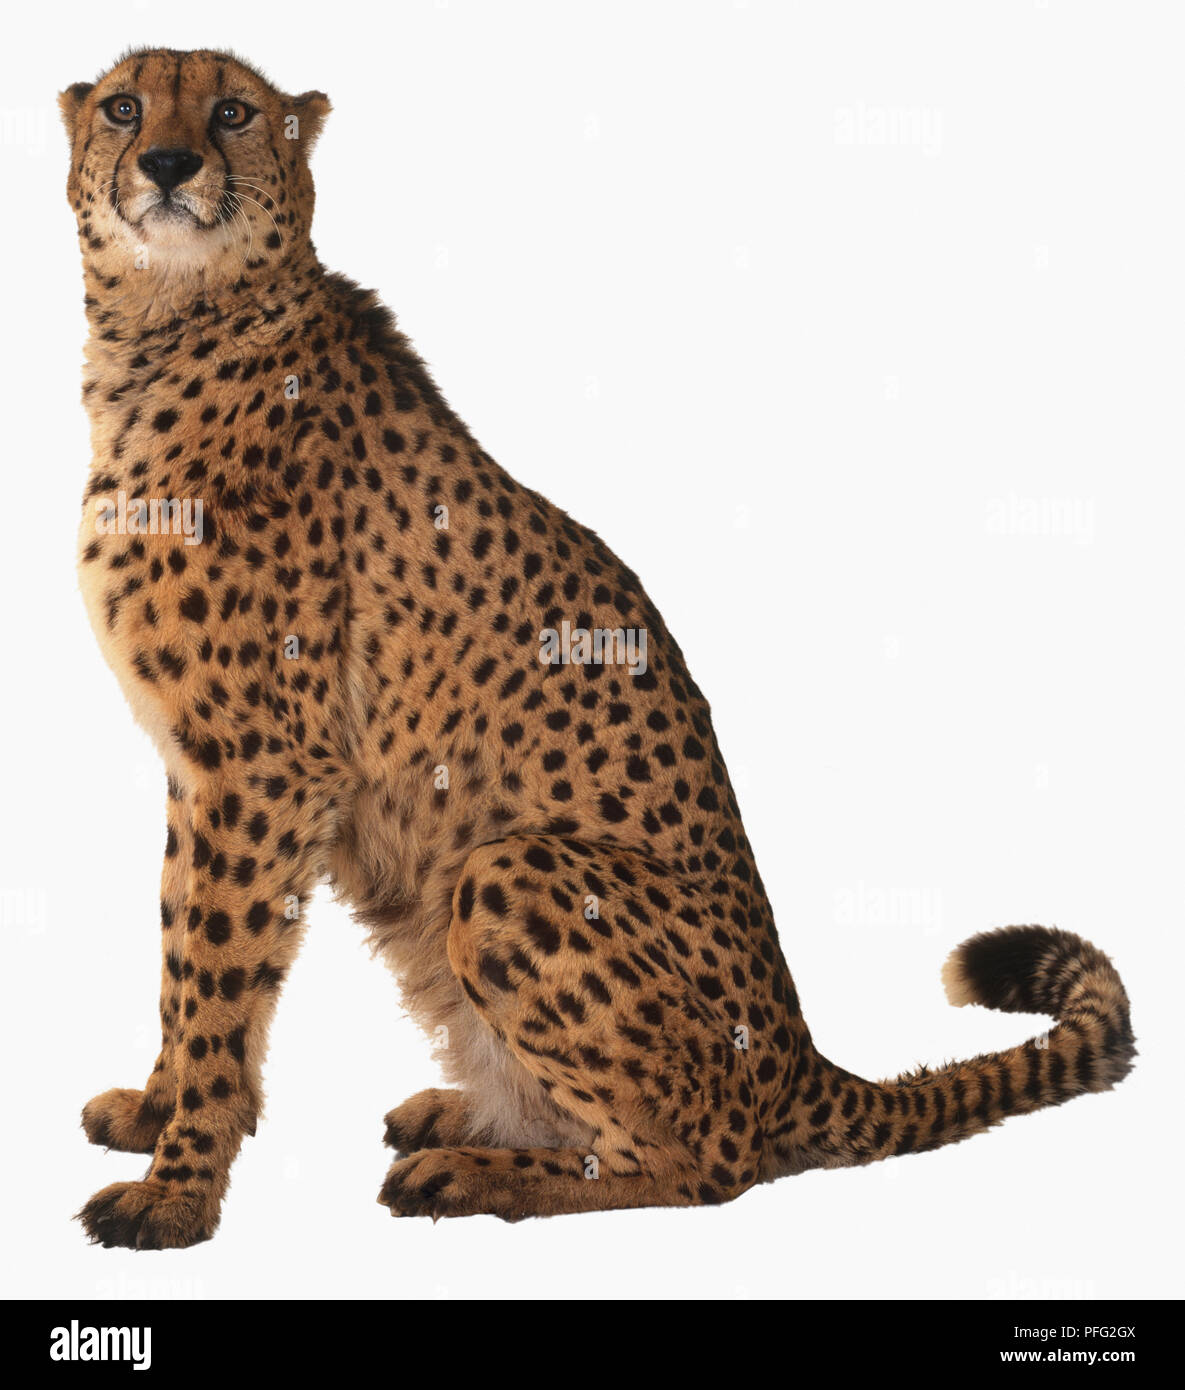 Cheetah (Acinonyx jubatus) sitting and looking sideways, side view Stock Photo